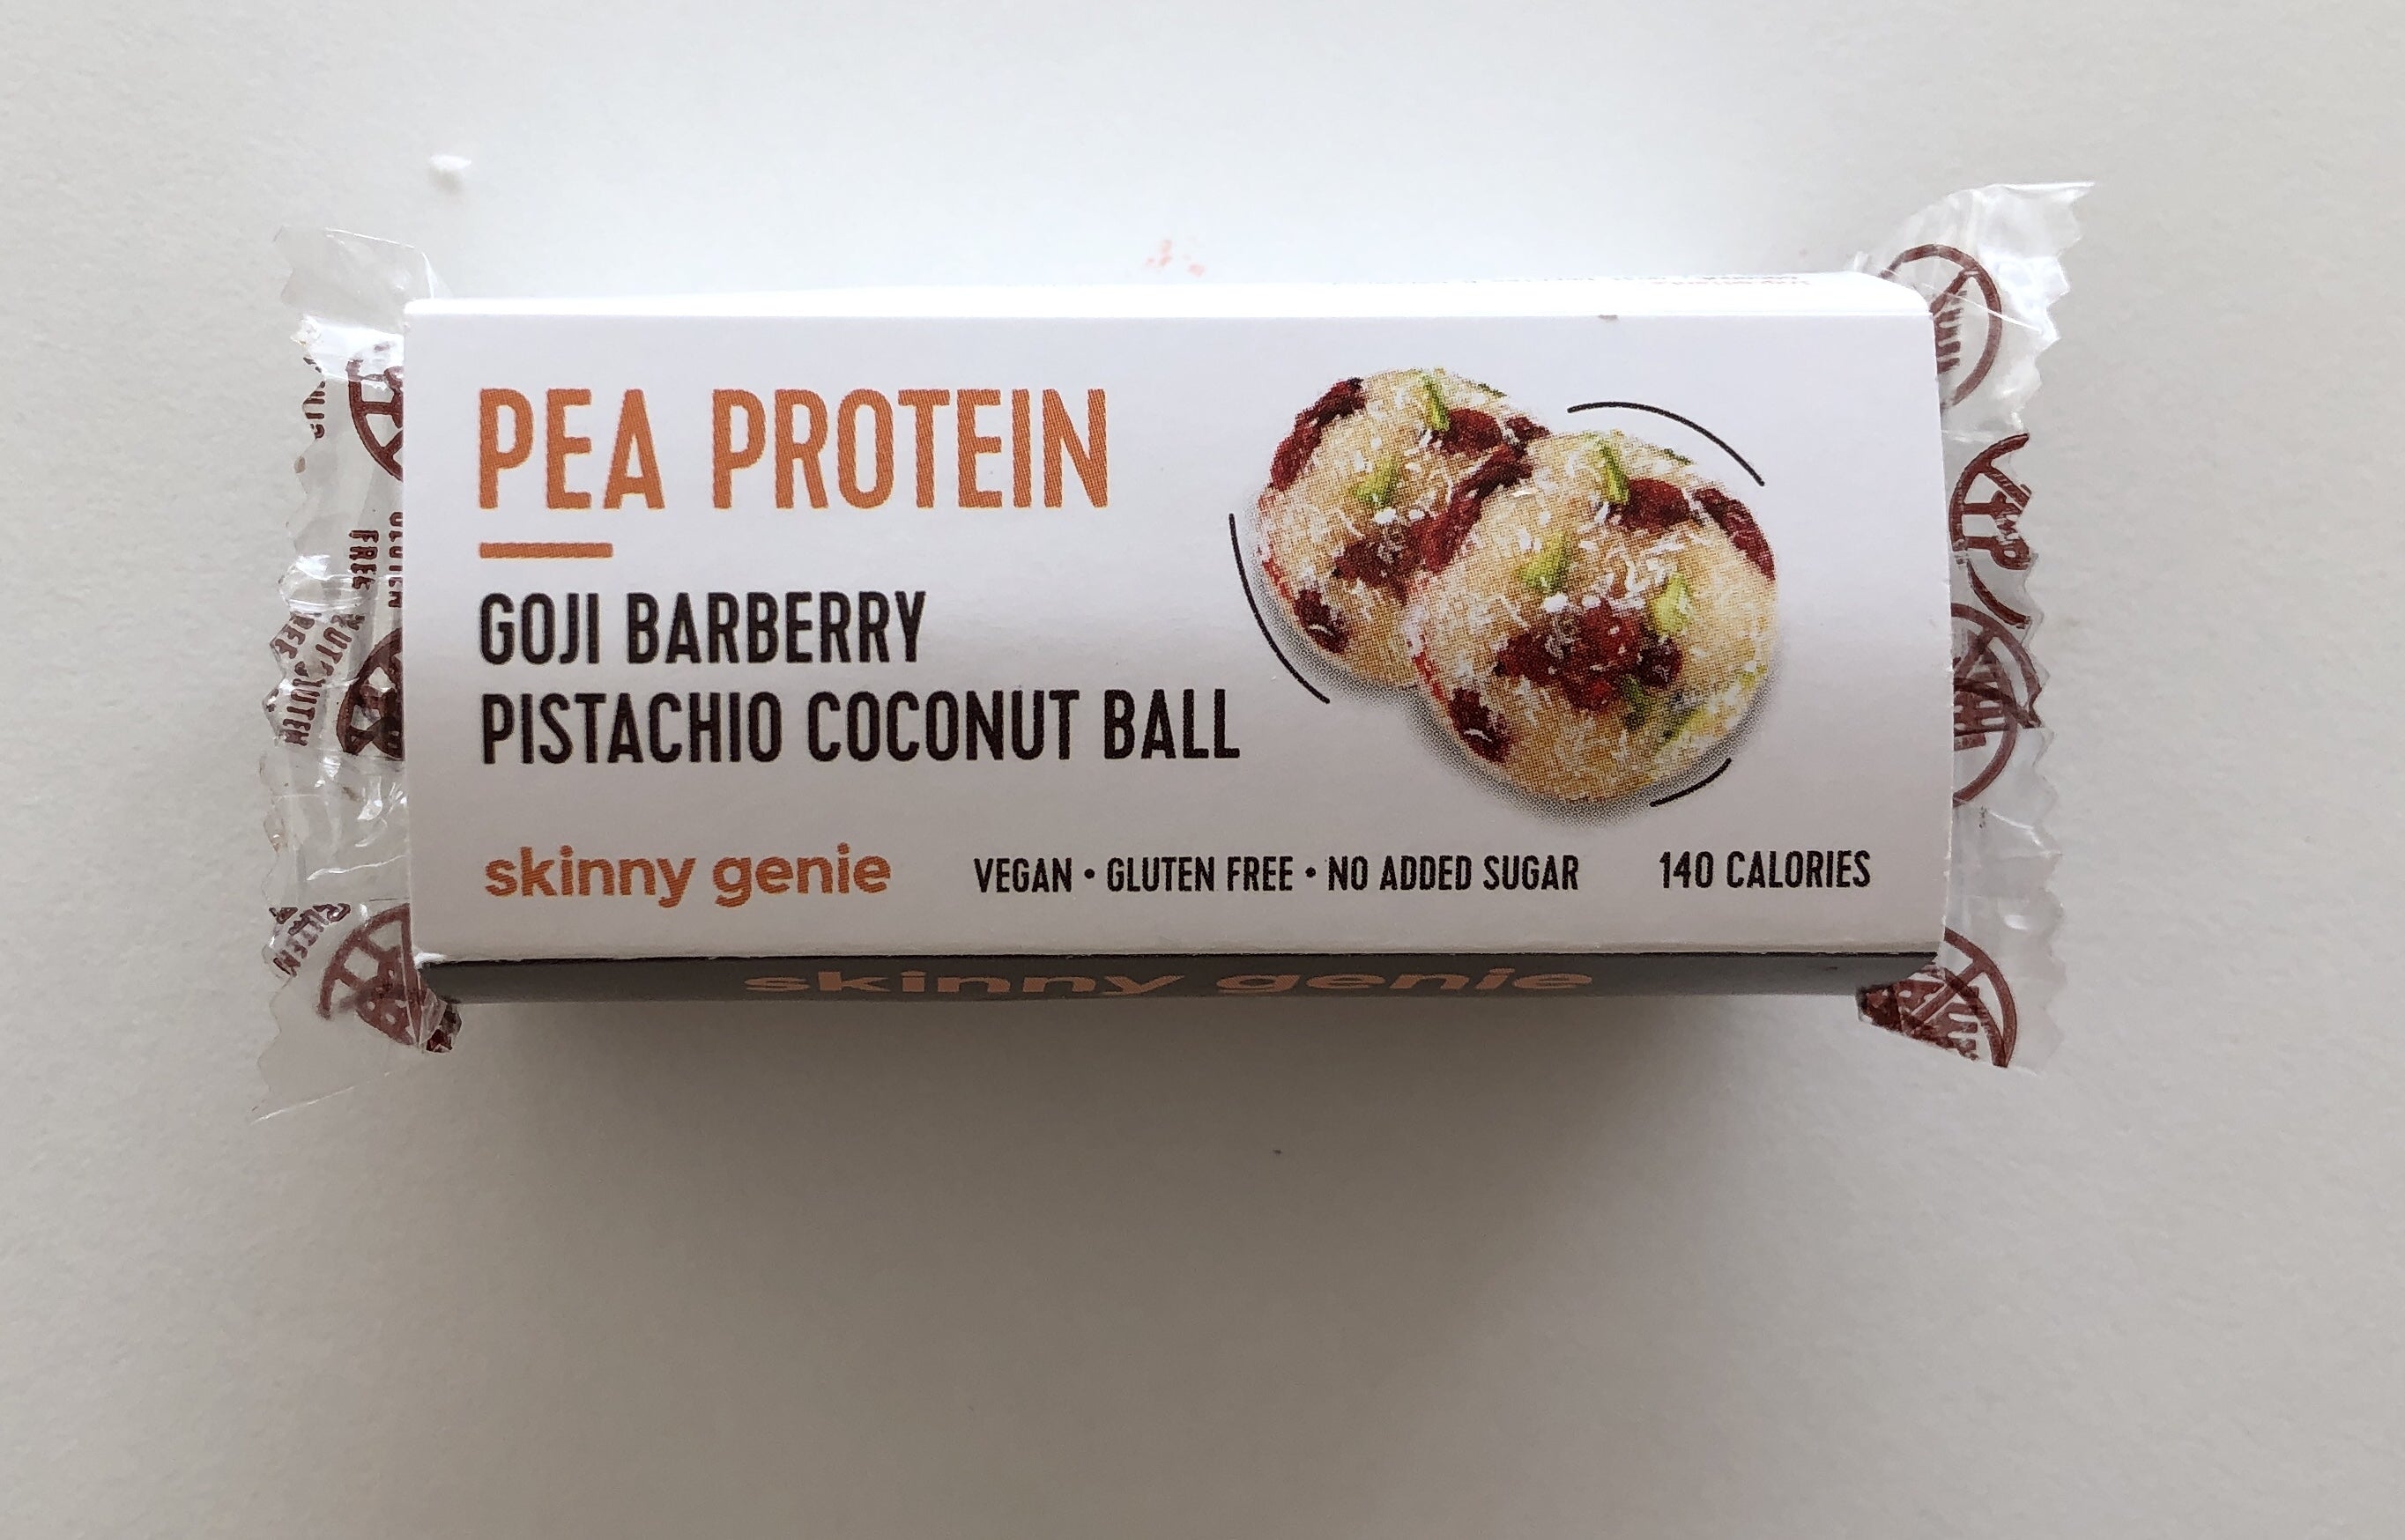 SKINNY GENIE Pea Protein Goji Barberry Pistachio Coconut Protein Ball, 40g, Vegan, Gluten-Free